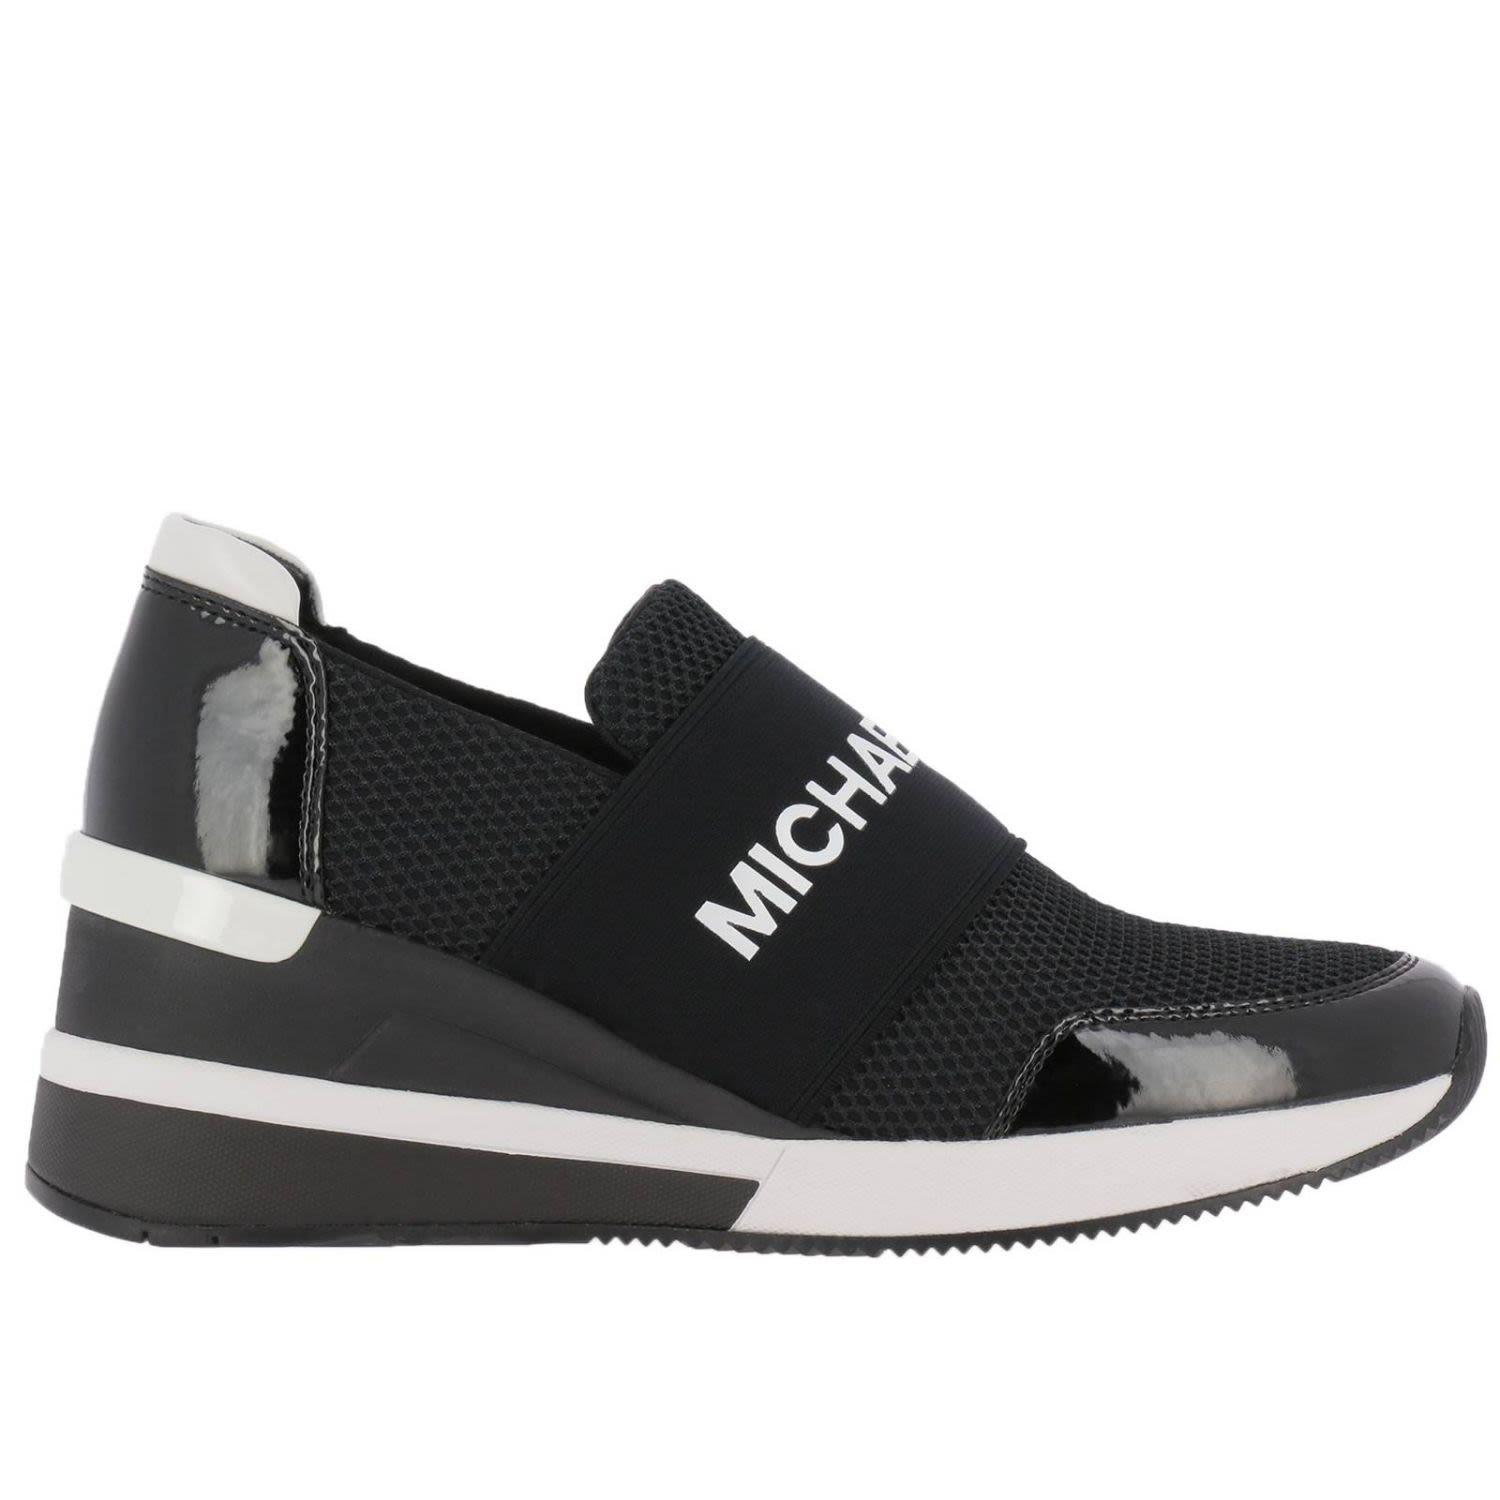 michael kors shoes 2018